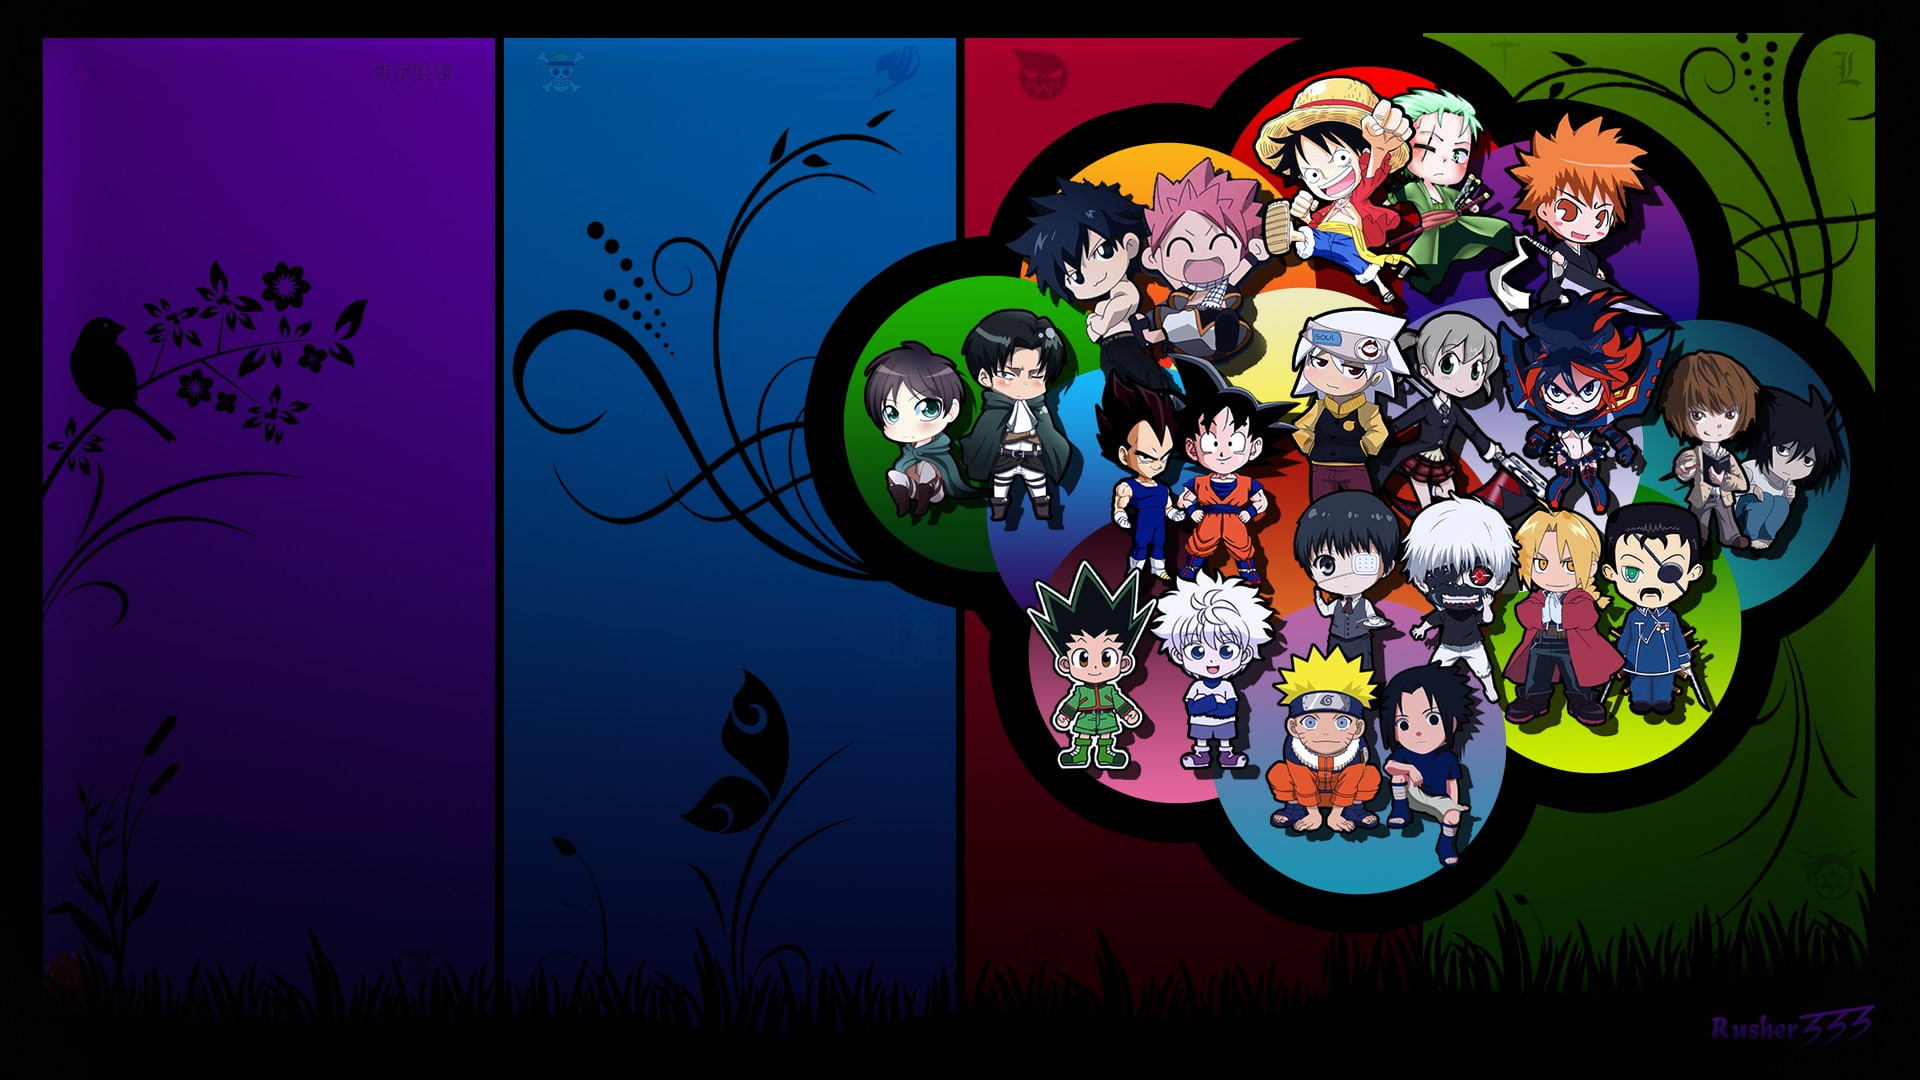 Anime, Characters, One Piece, Hunter x Hunter, Shingeki no Kyojin, Fairy Tail, Bleach, Full Metal Alchemist, Death Note, Kill la Kill, Naruto